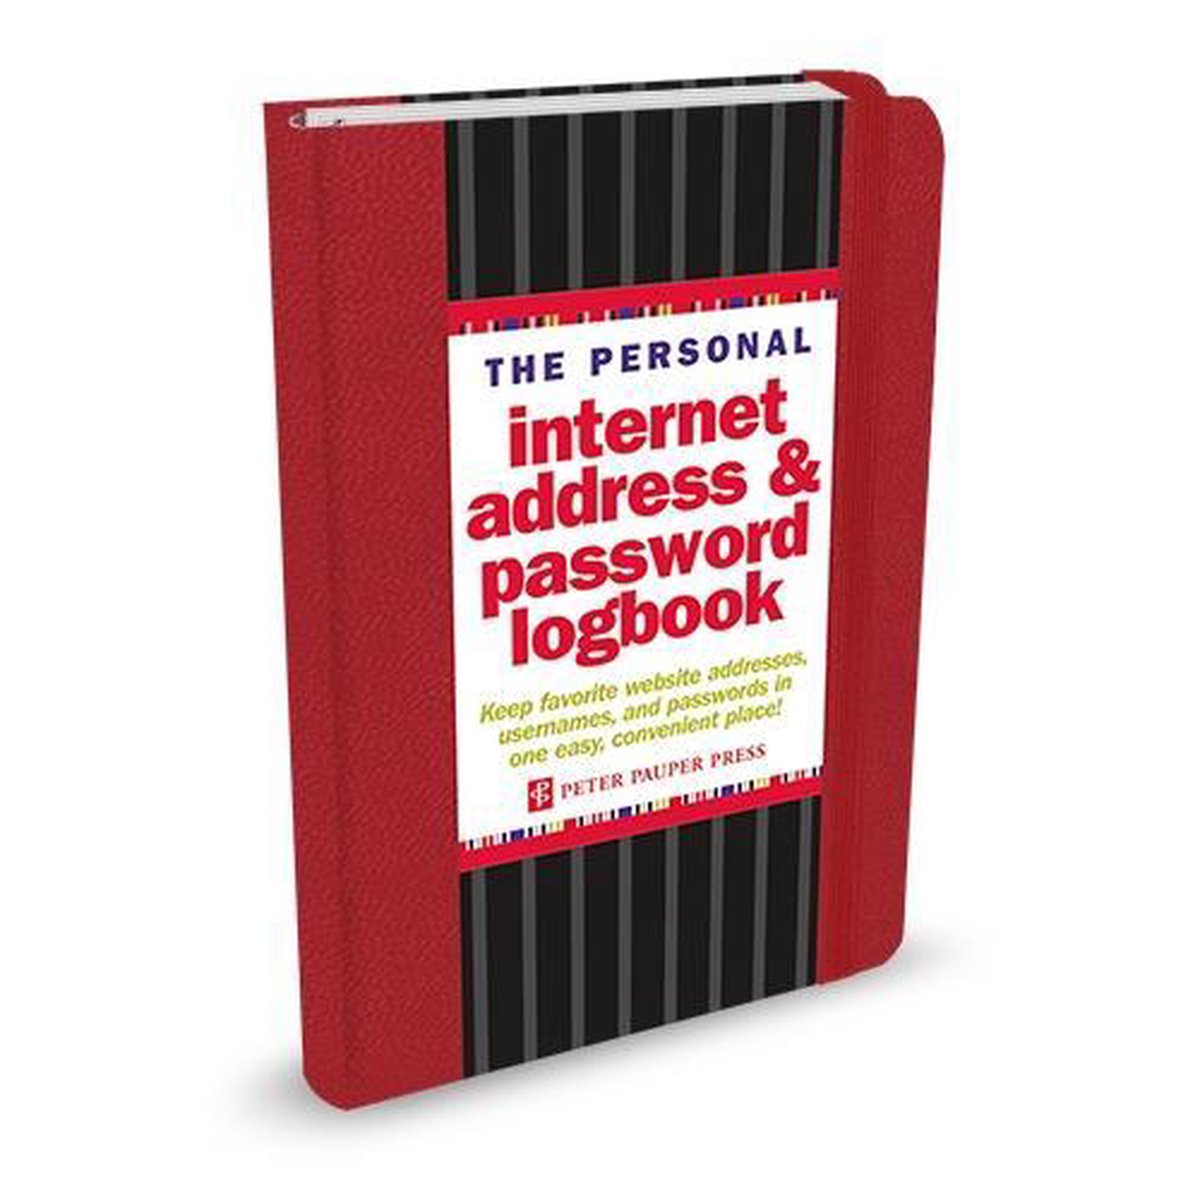 Internet address & passwordboekje (rood)